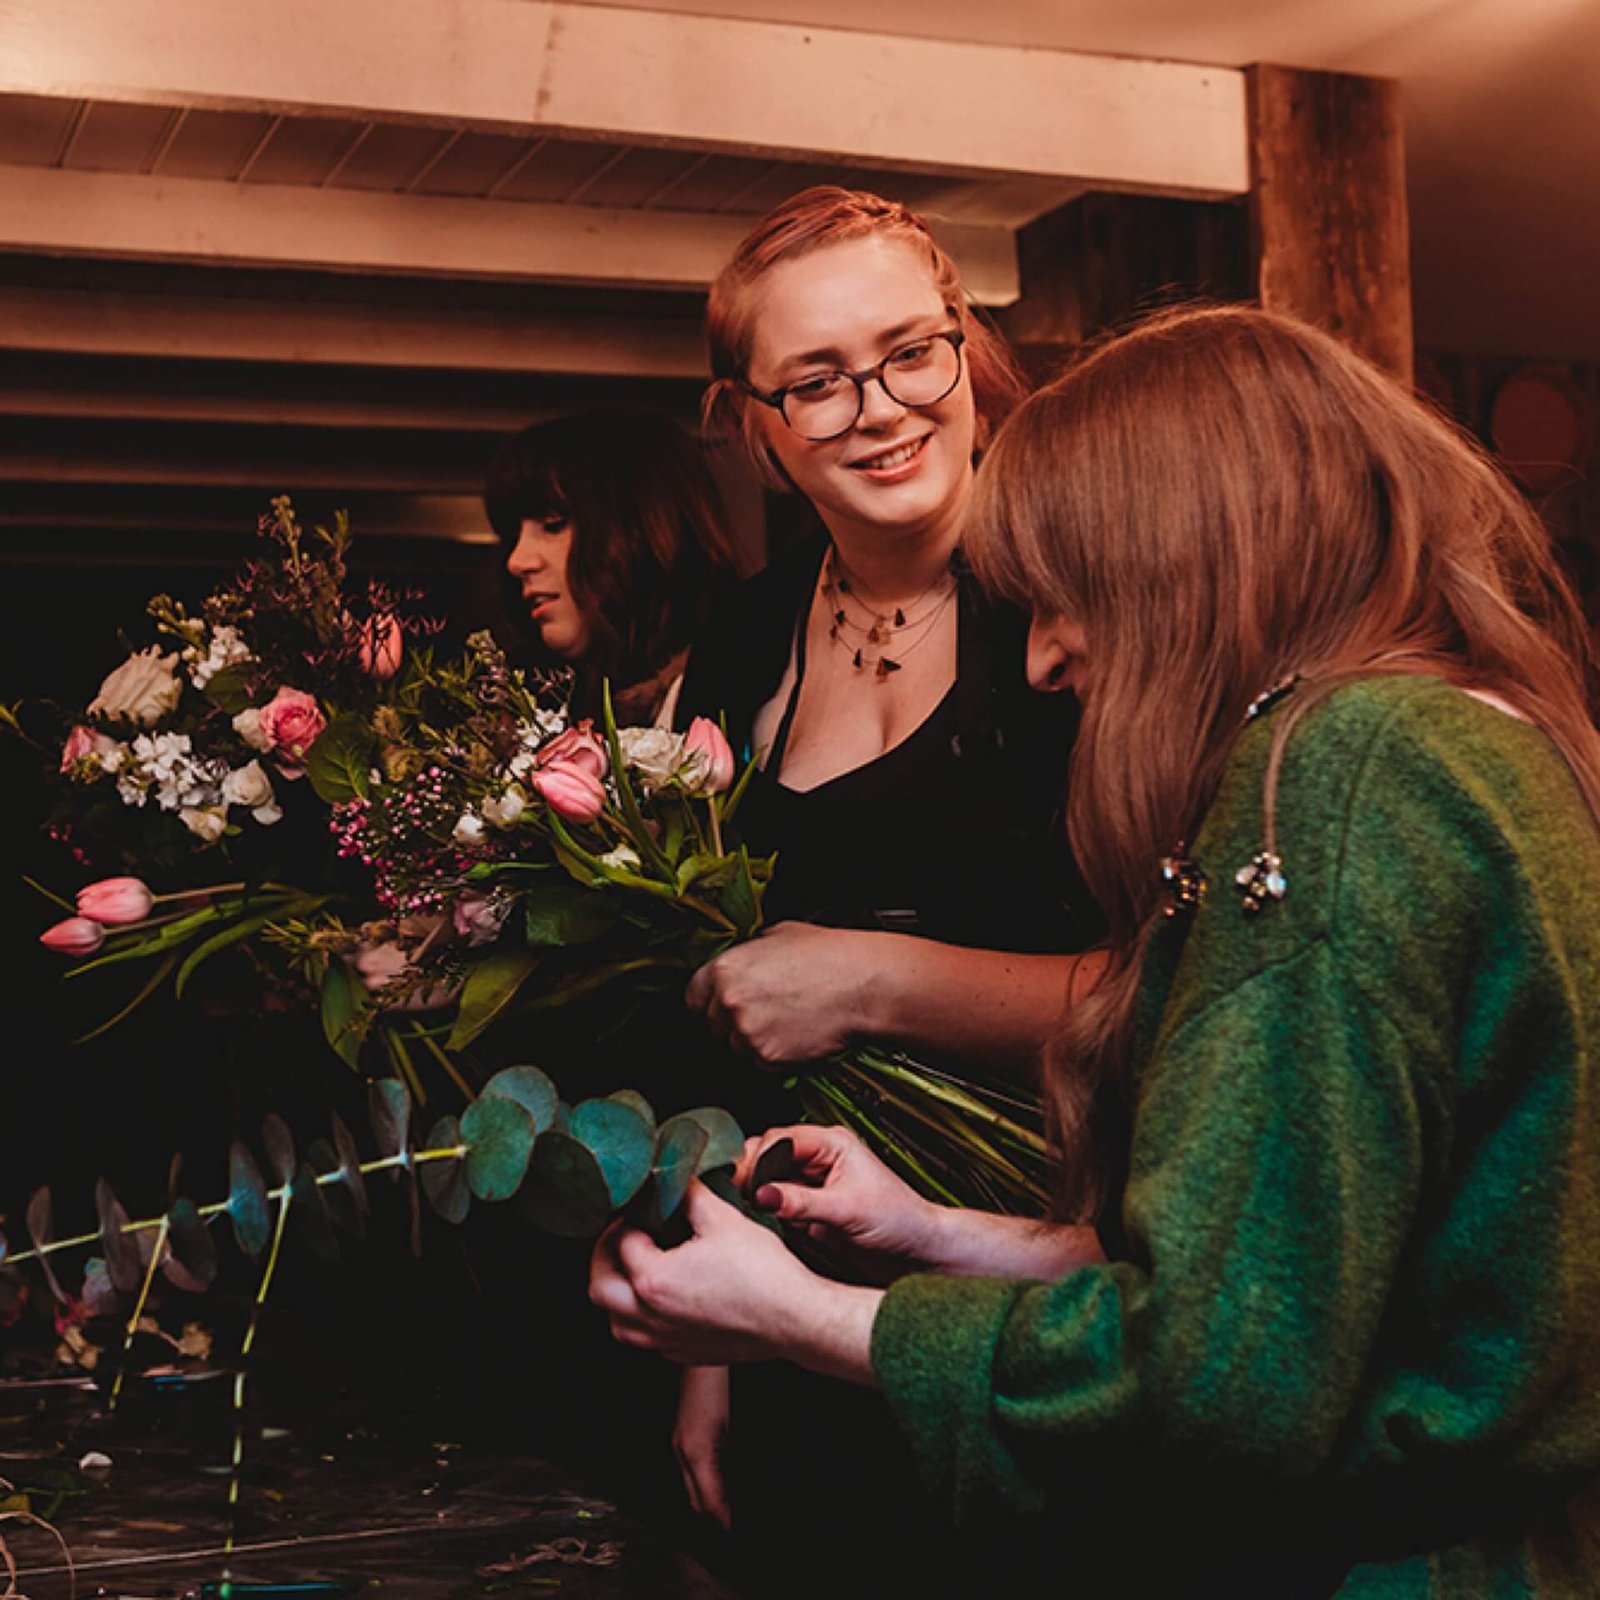 floral workshop attendee arranging a bouquet